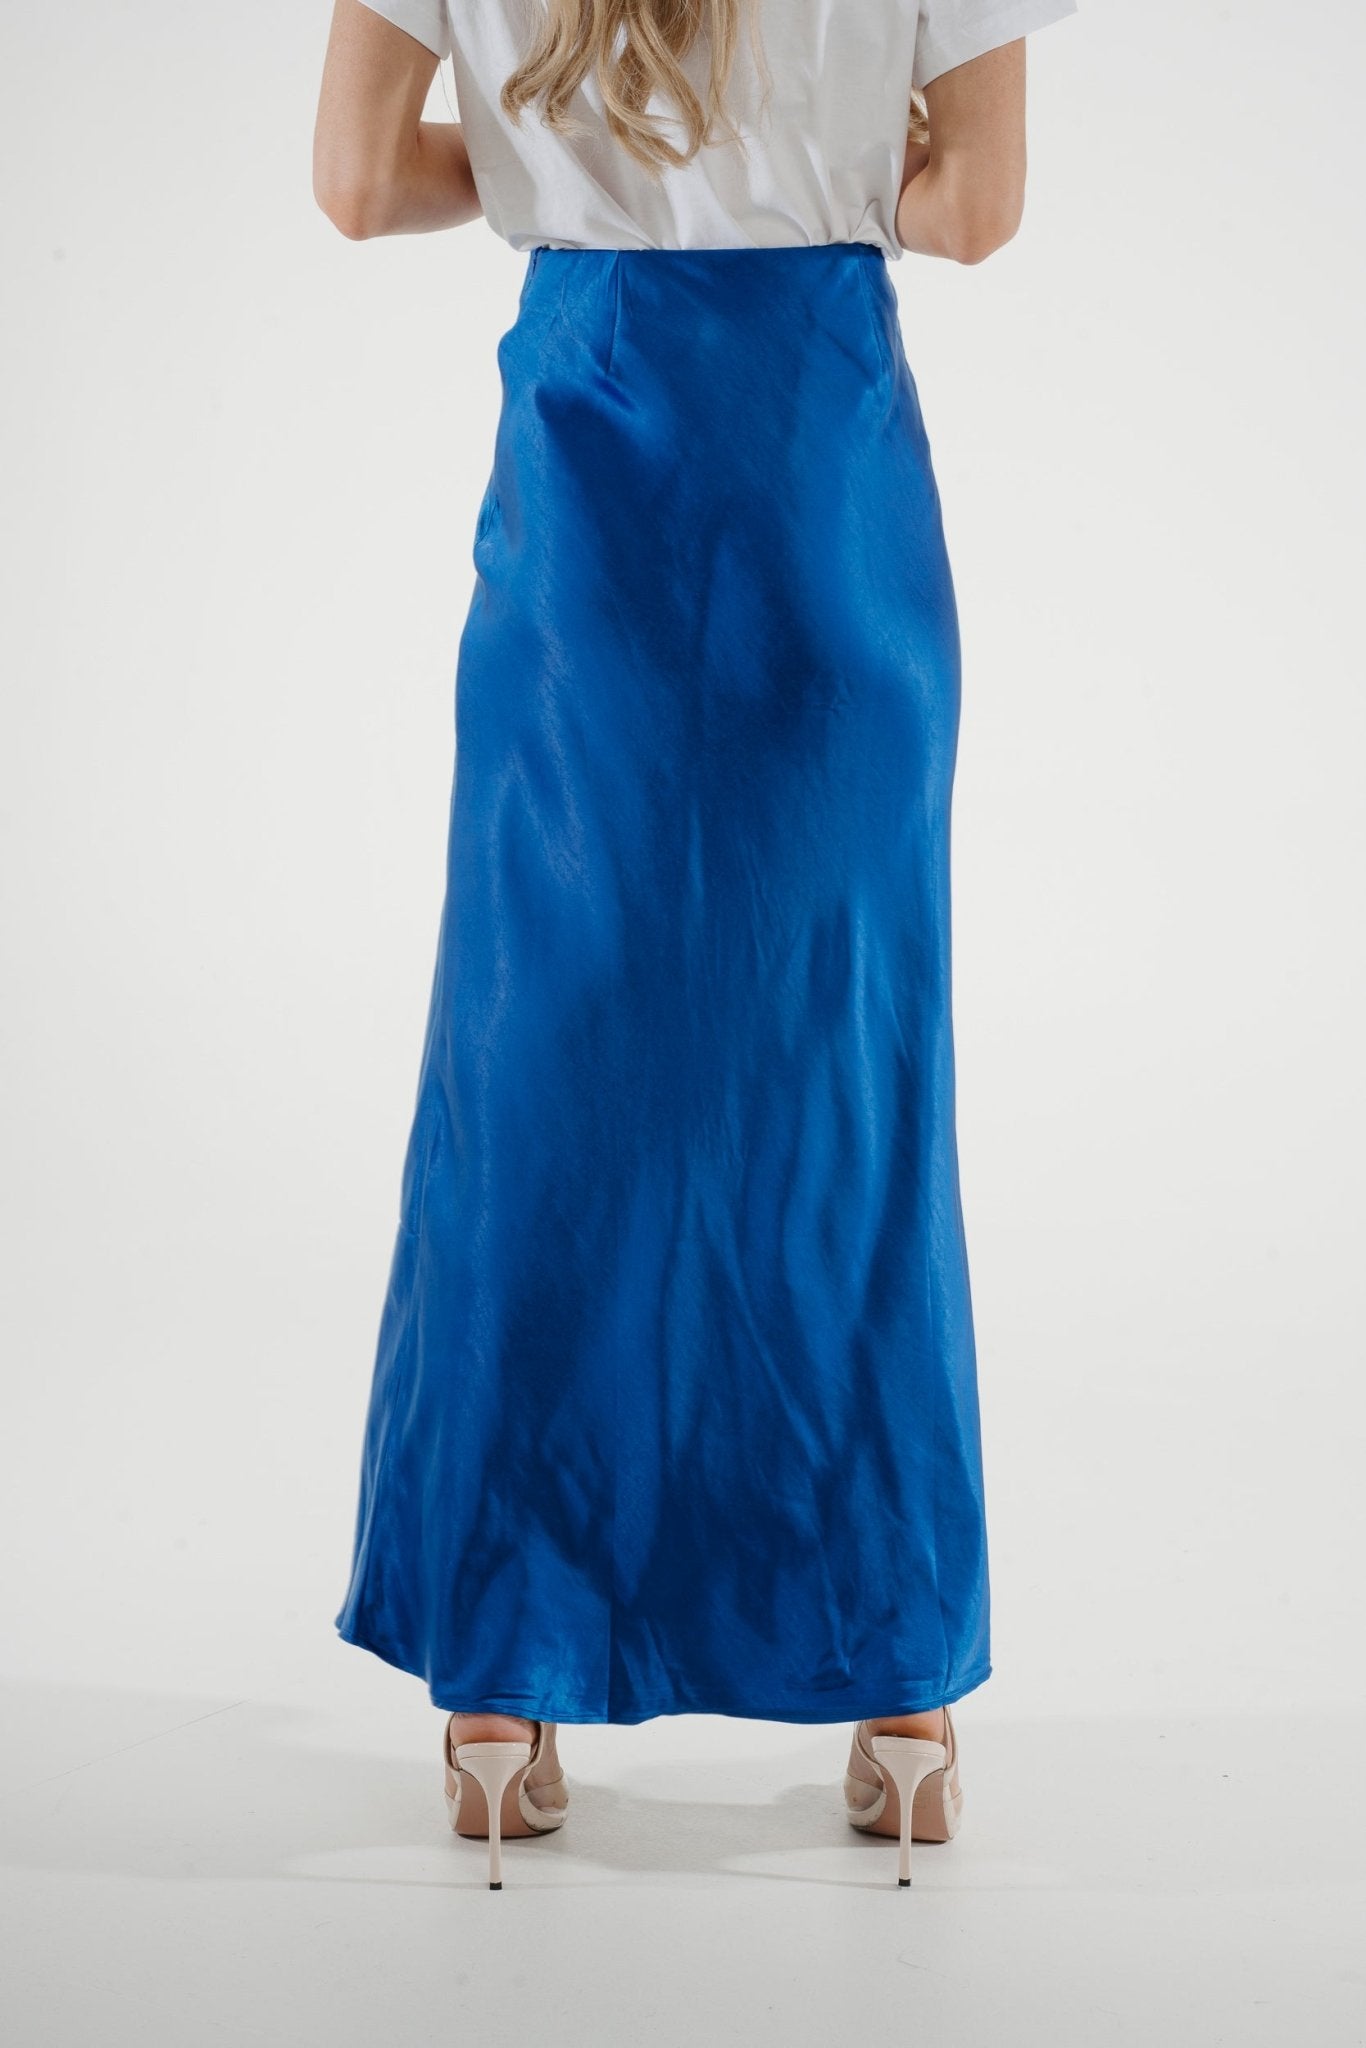 Jane Longline Satin Skirt In Blue - The Walk in Wardrobe